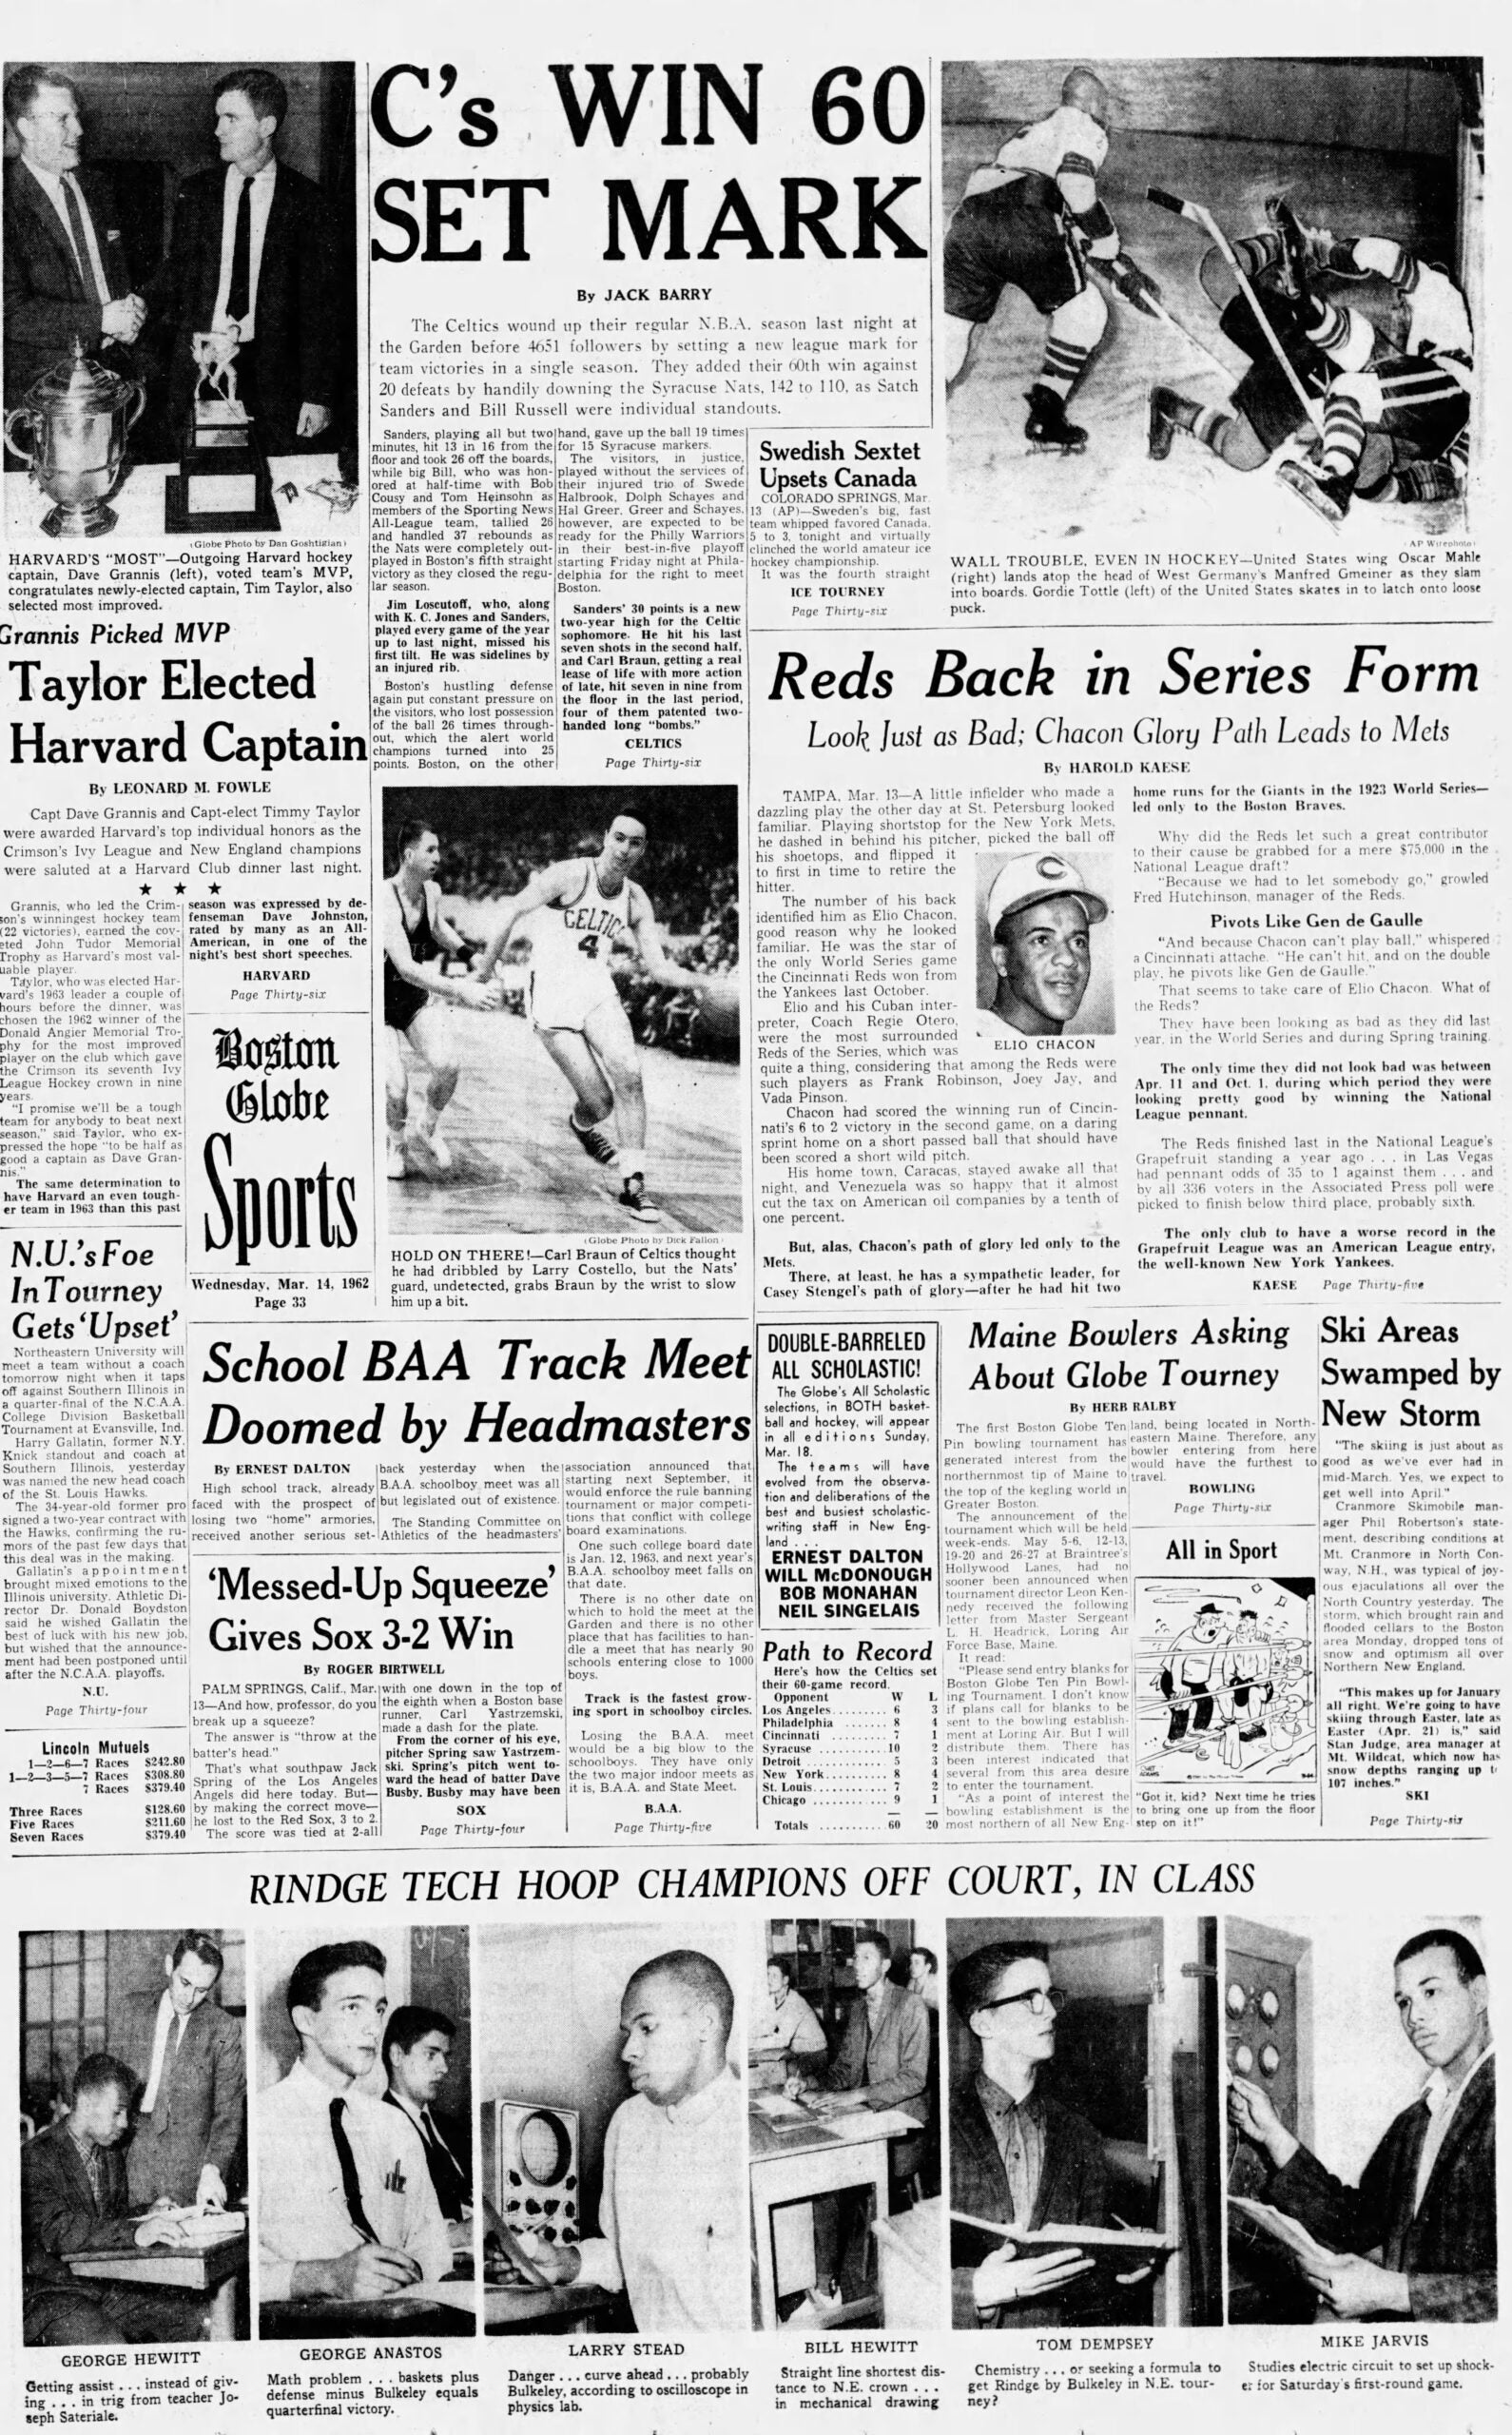 1962 Celtics Boston Globe sports section